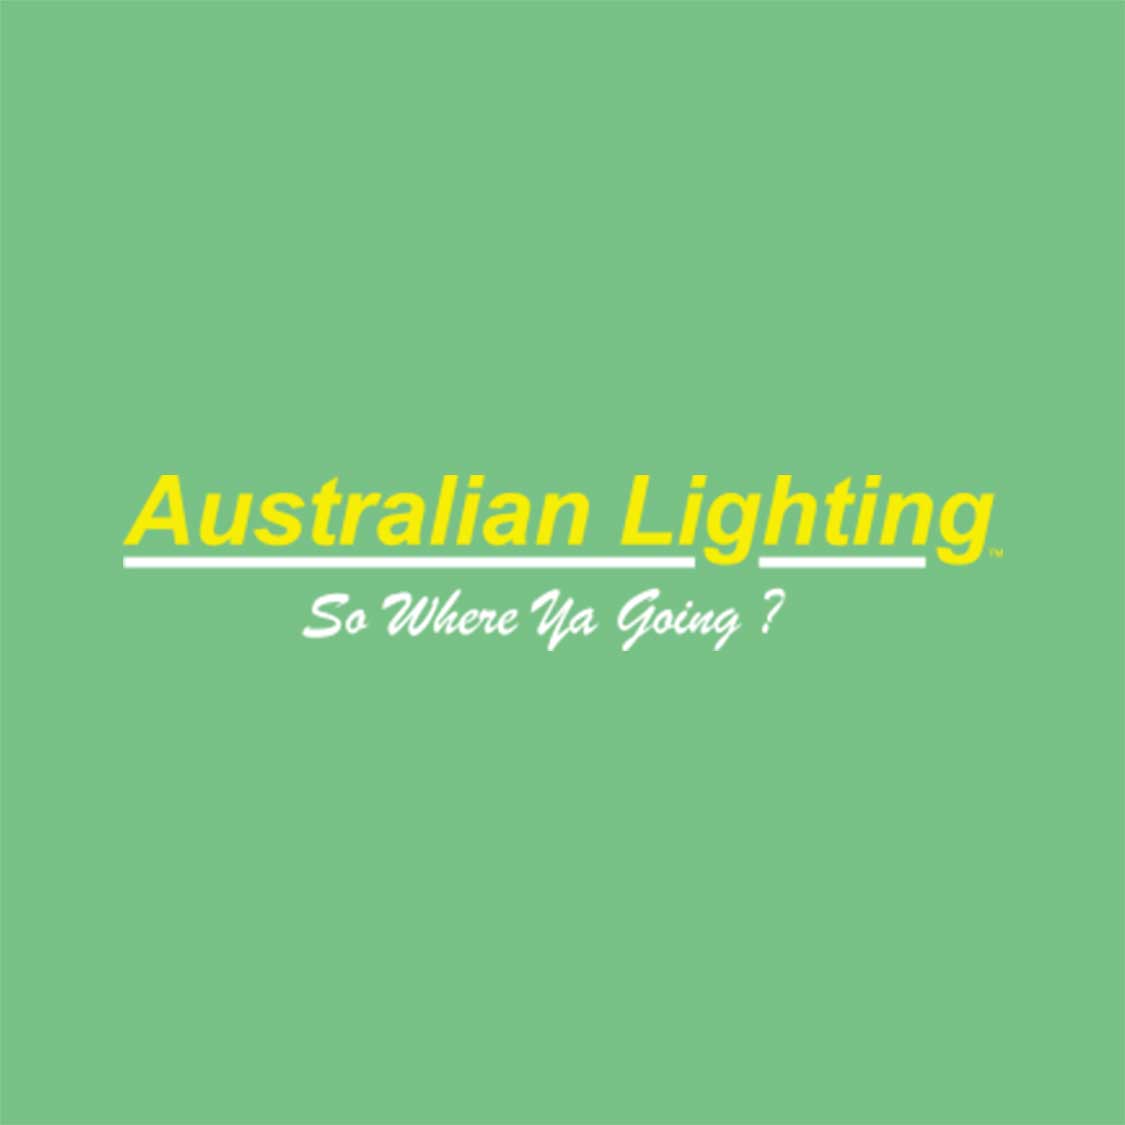 Polar Dc Matt White Fan With 18w Cct Dimmable Led Light 48 - Best Dc Ceiling Fans With Light Australia